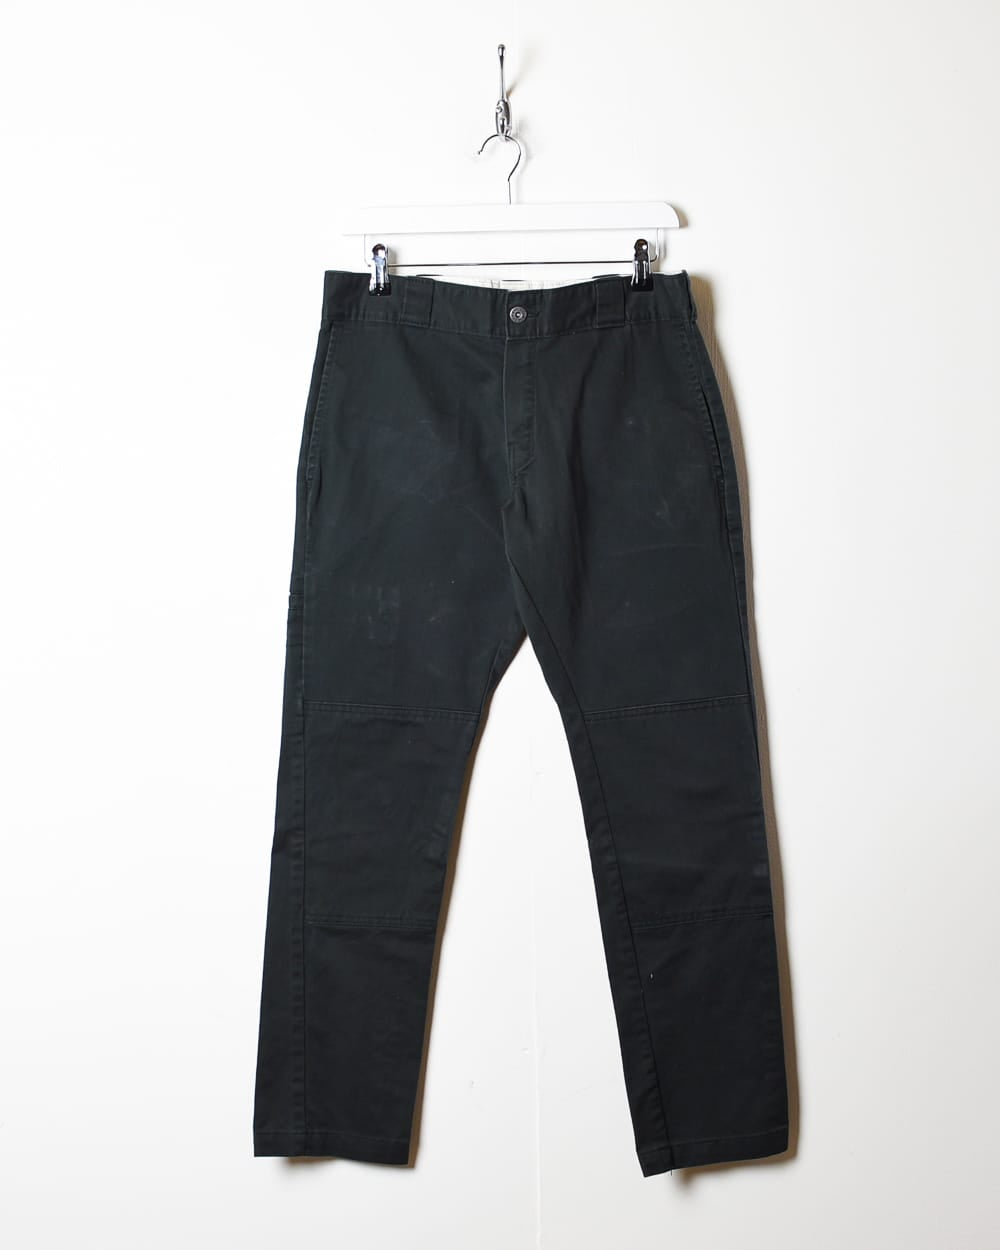 Black Dickies Skinny Straight Trousers - W32 L29